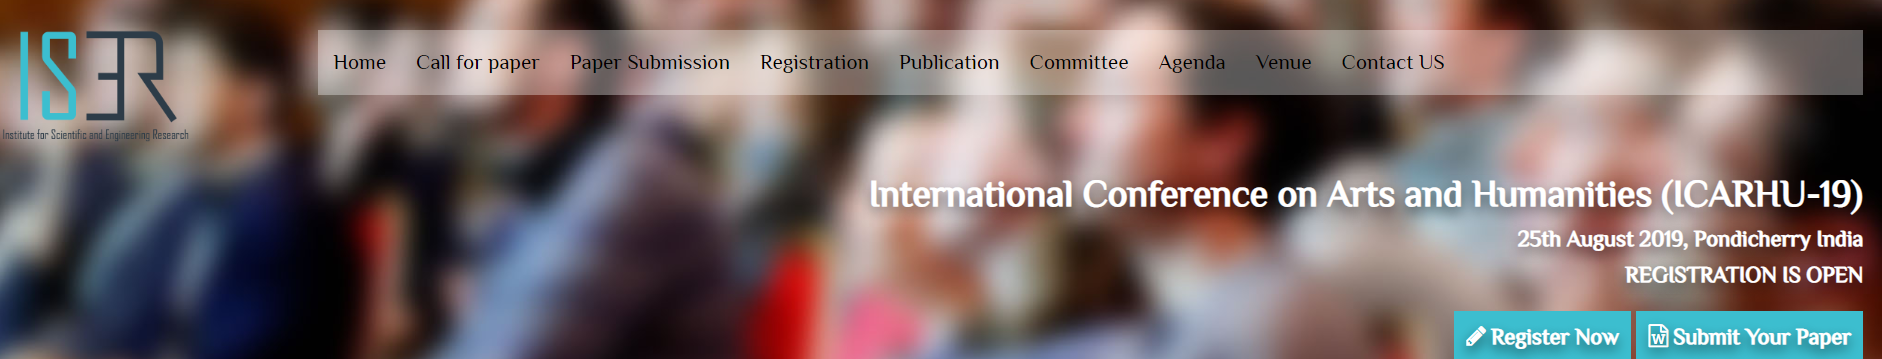 International Conference on Arts and Humanities (ICARHU-19), Pondicherry, Tamil Nadu, India